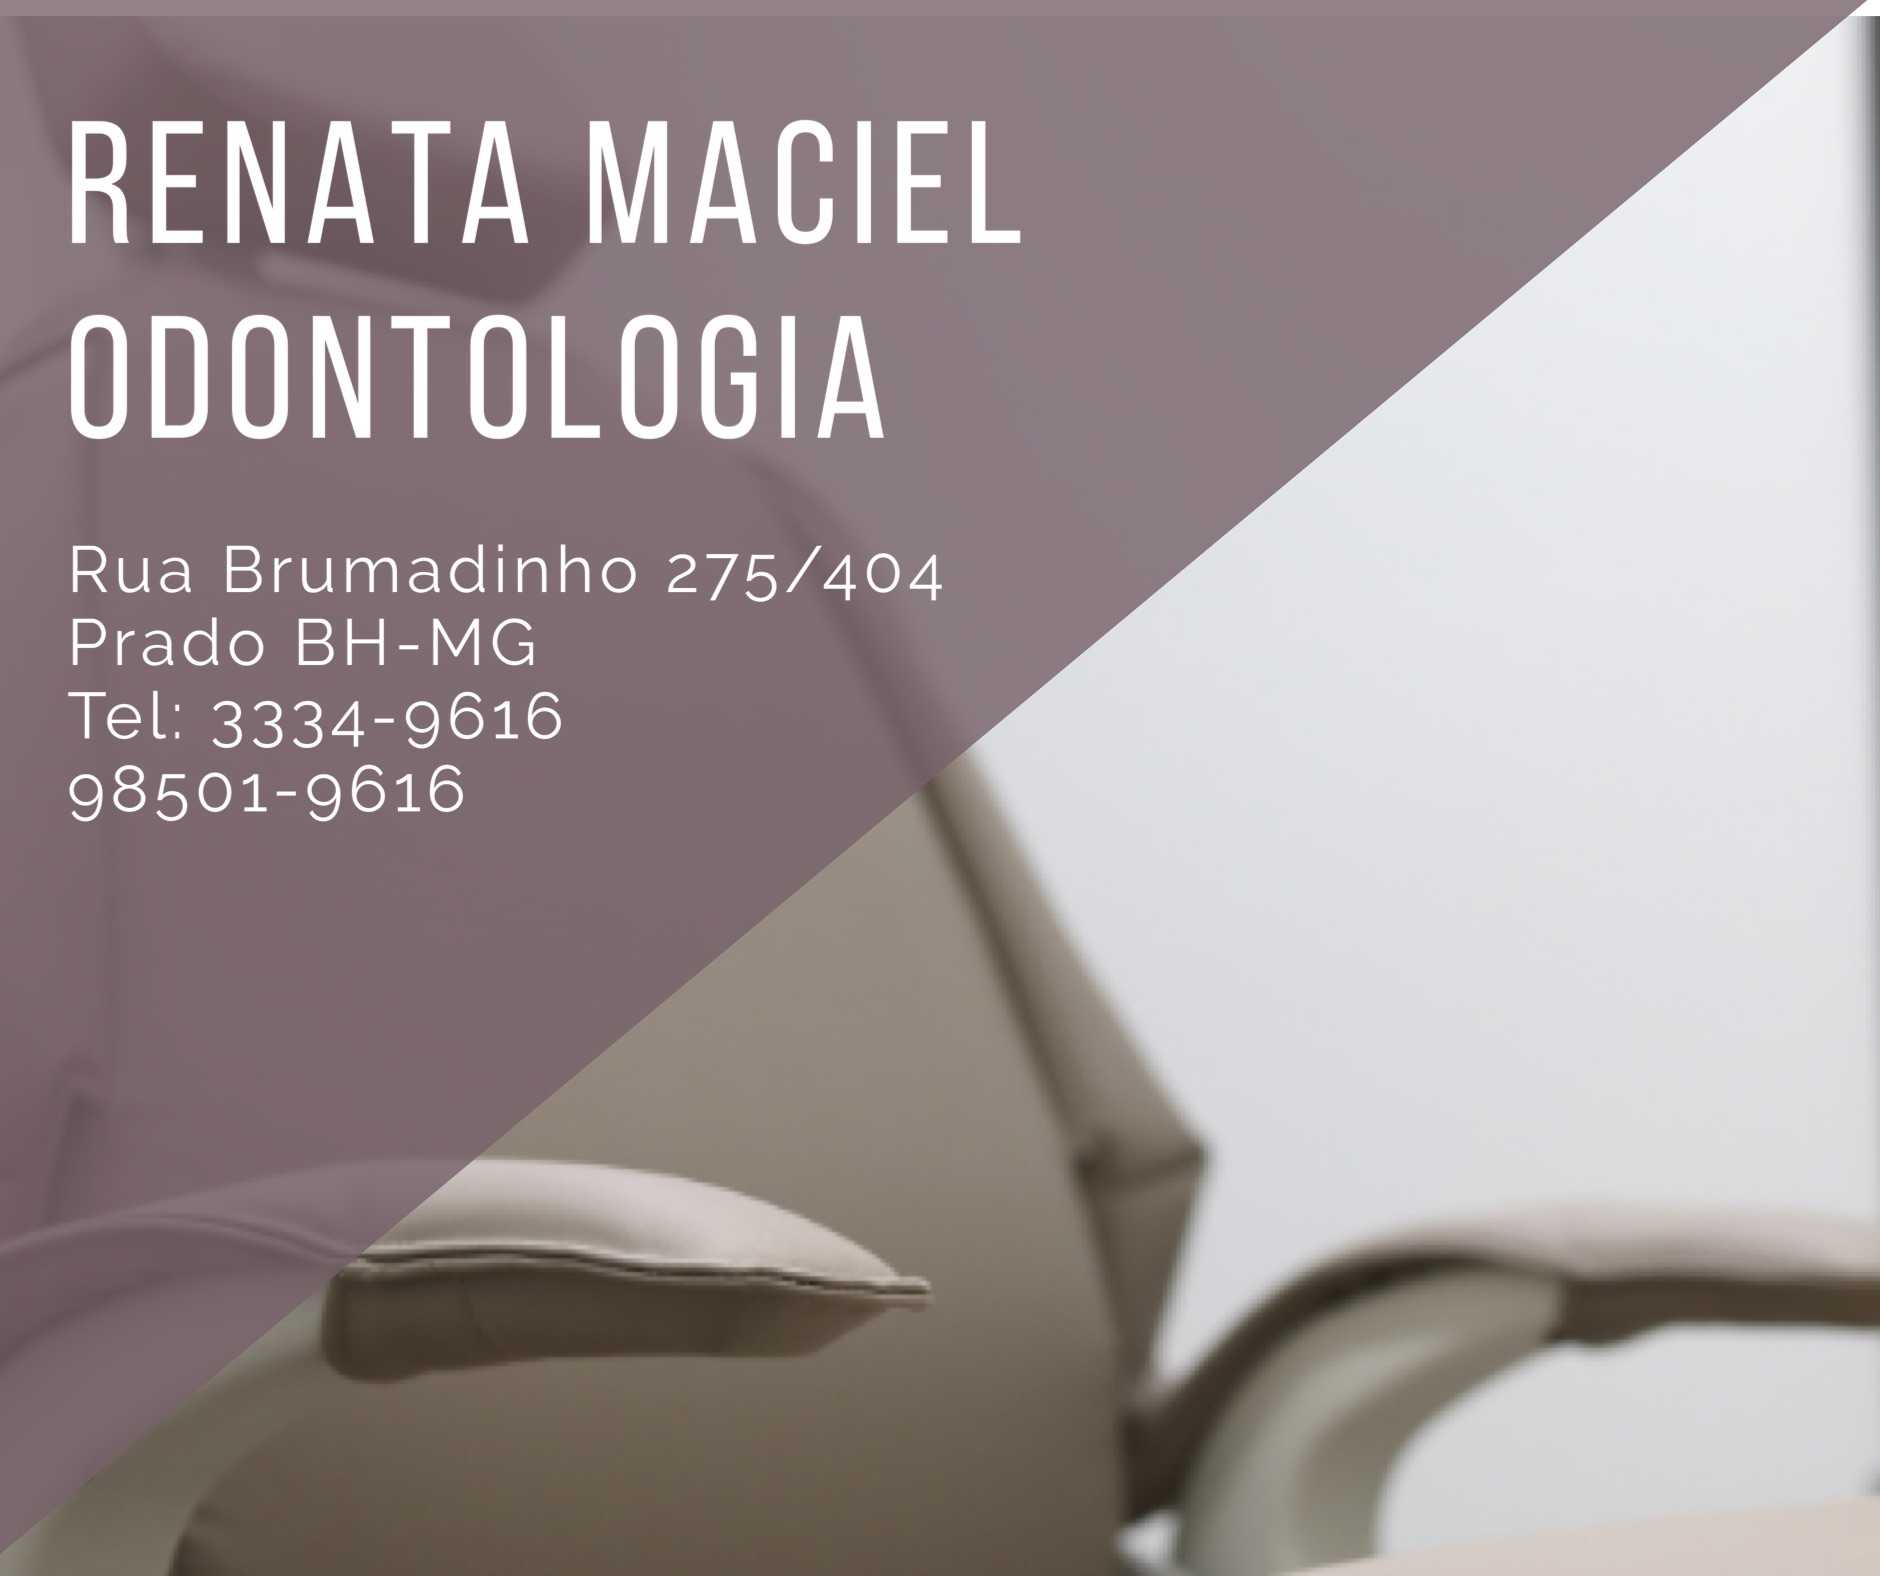 Renata Maciel Odontologia